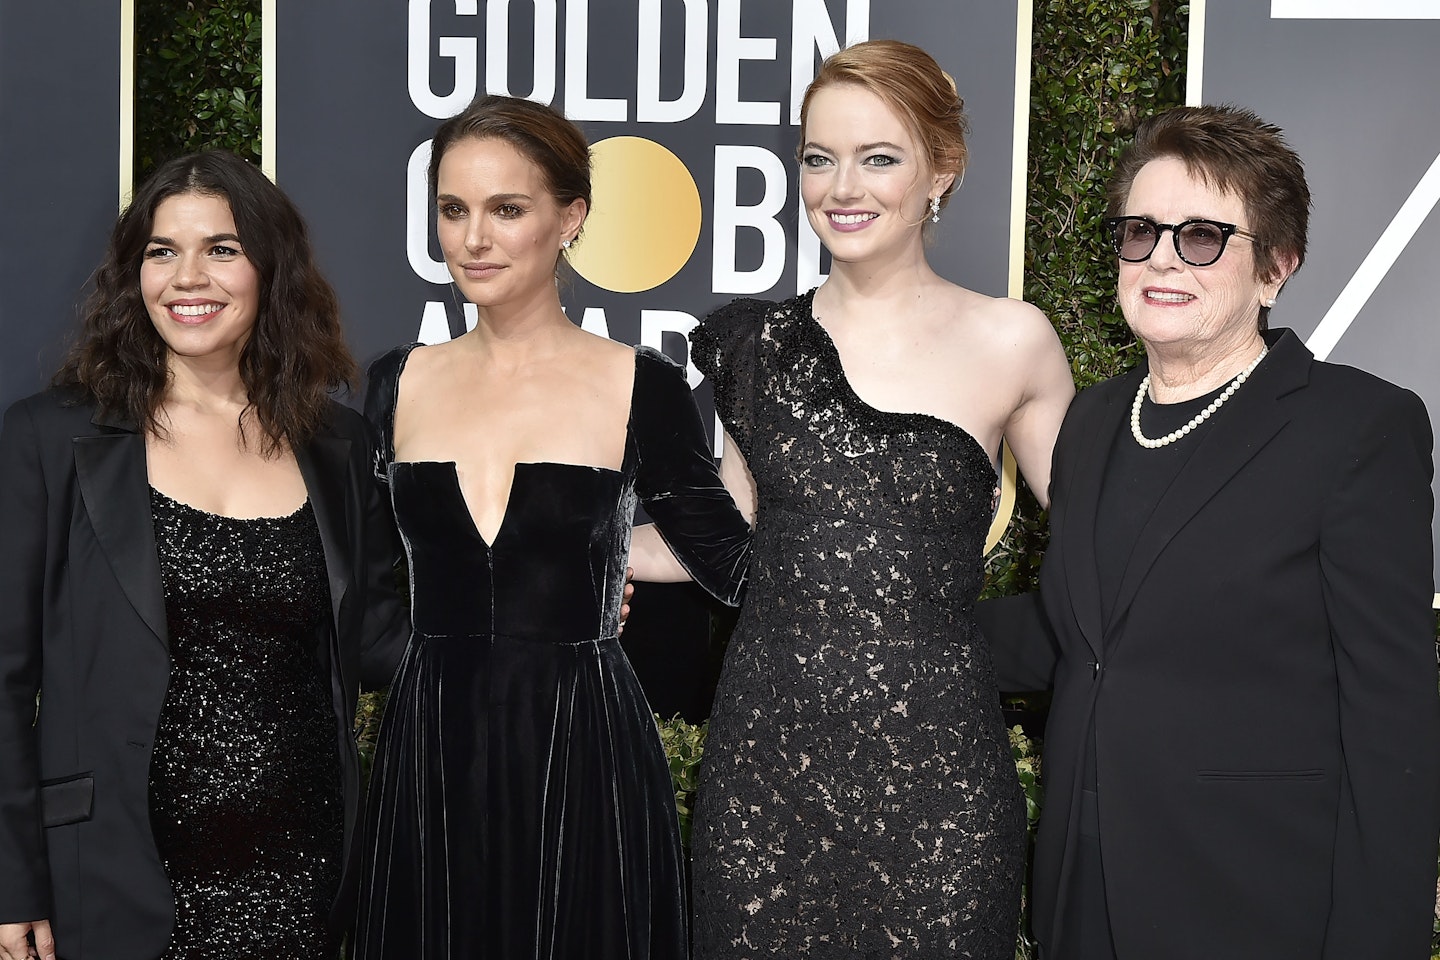 America Ferrera, Natalie Portman, Emma Stone and Billie Jean King